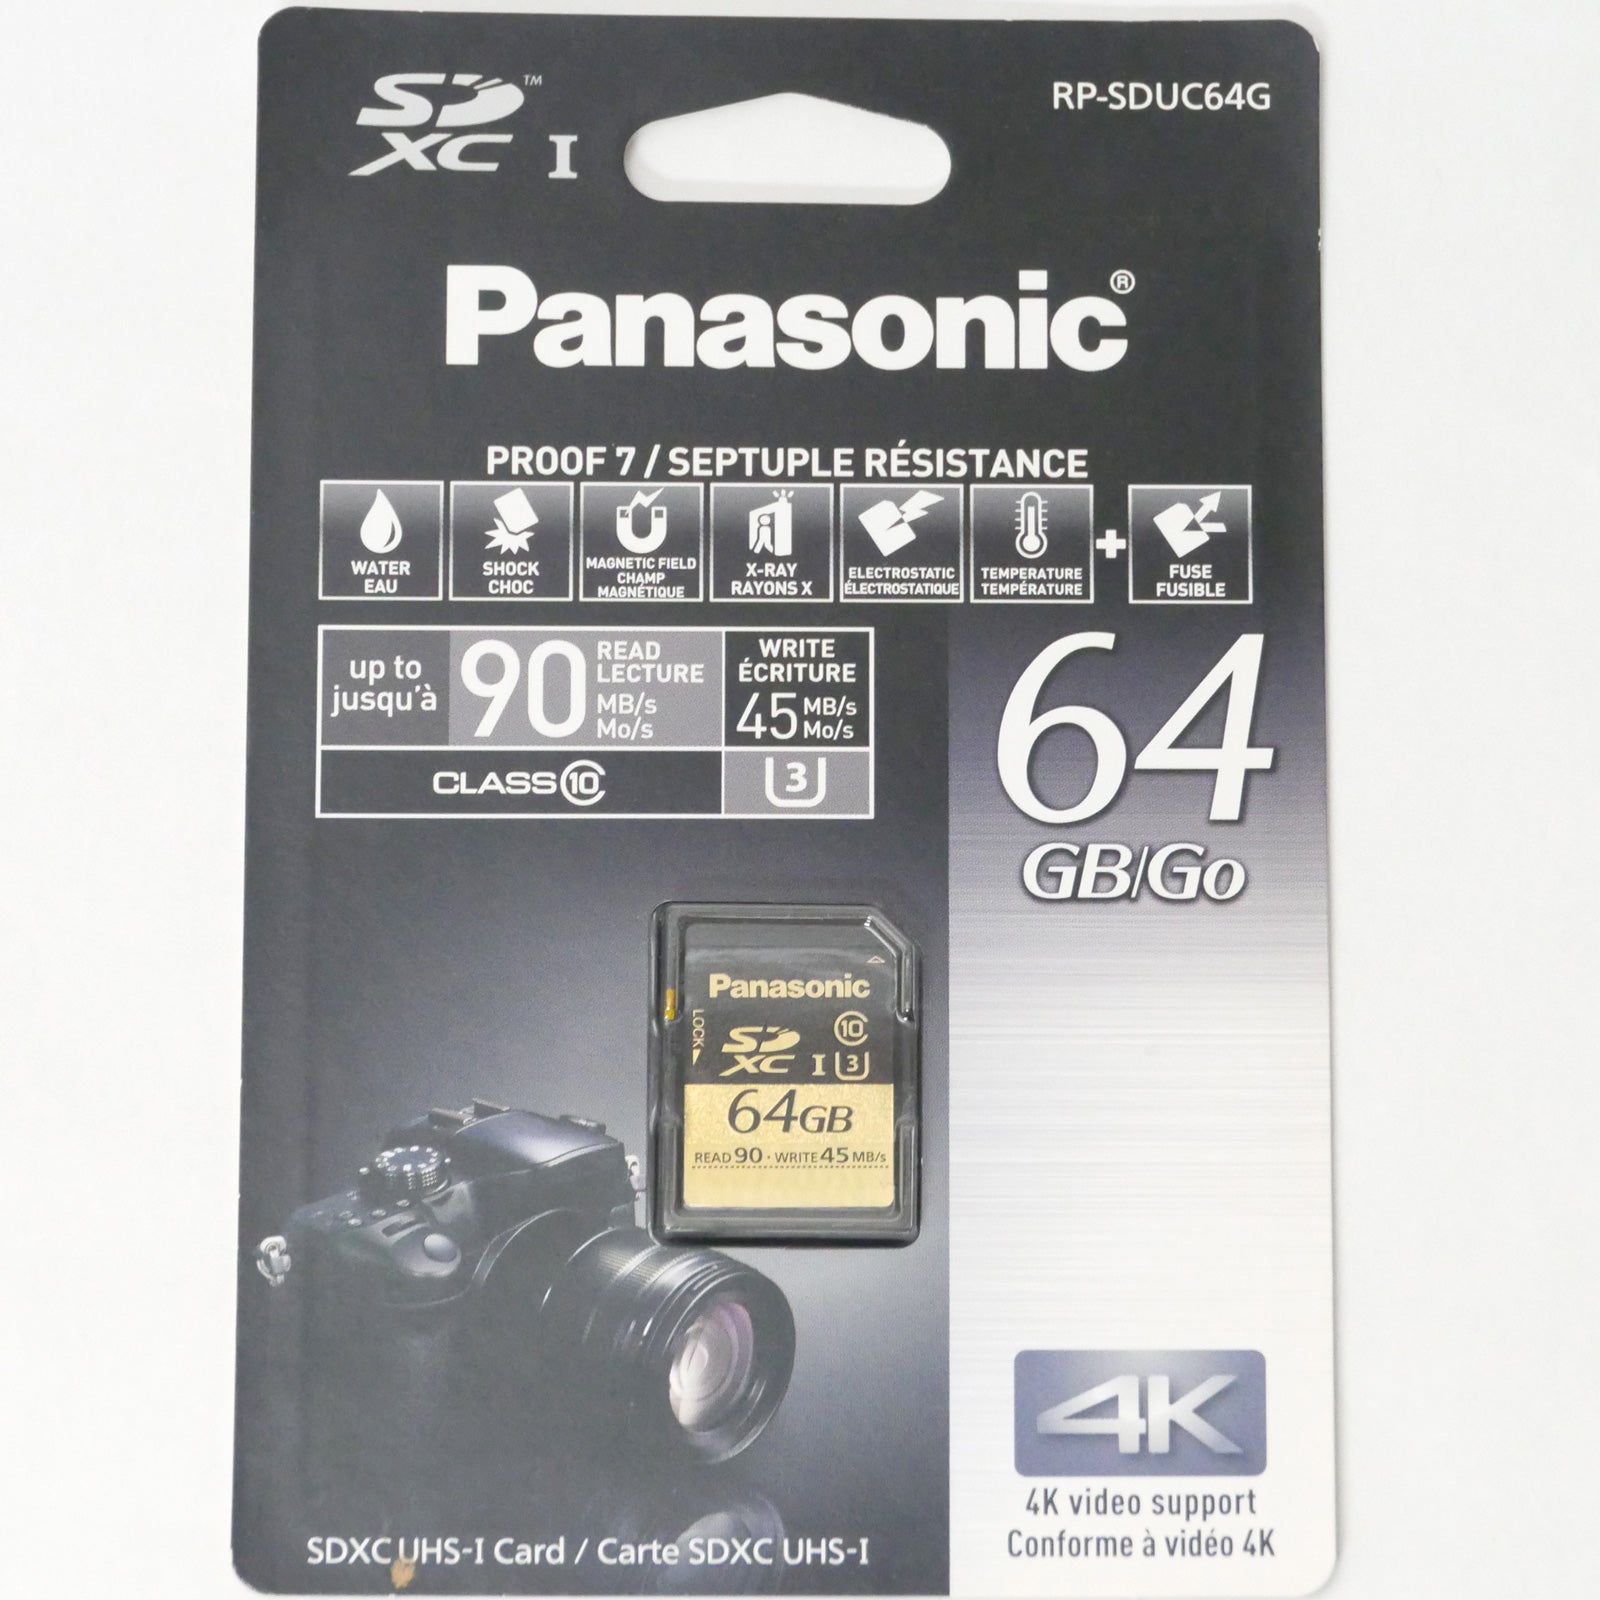 Panasonic(パナソニック) 64GB SDXC メモリーカード RP-SDU64GAK(海外パッケージ) 未開封品